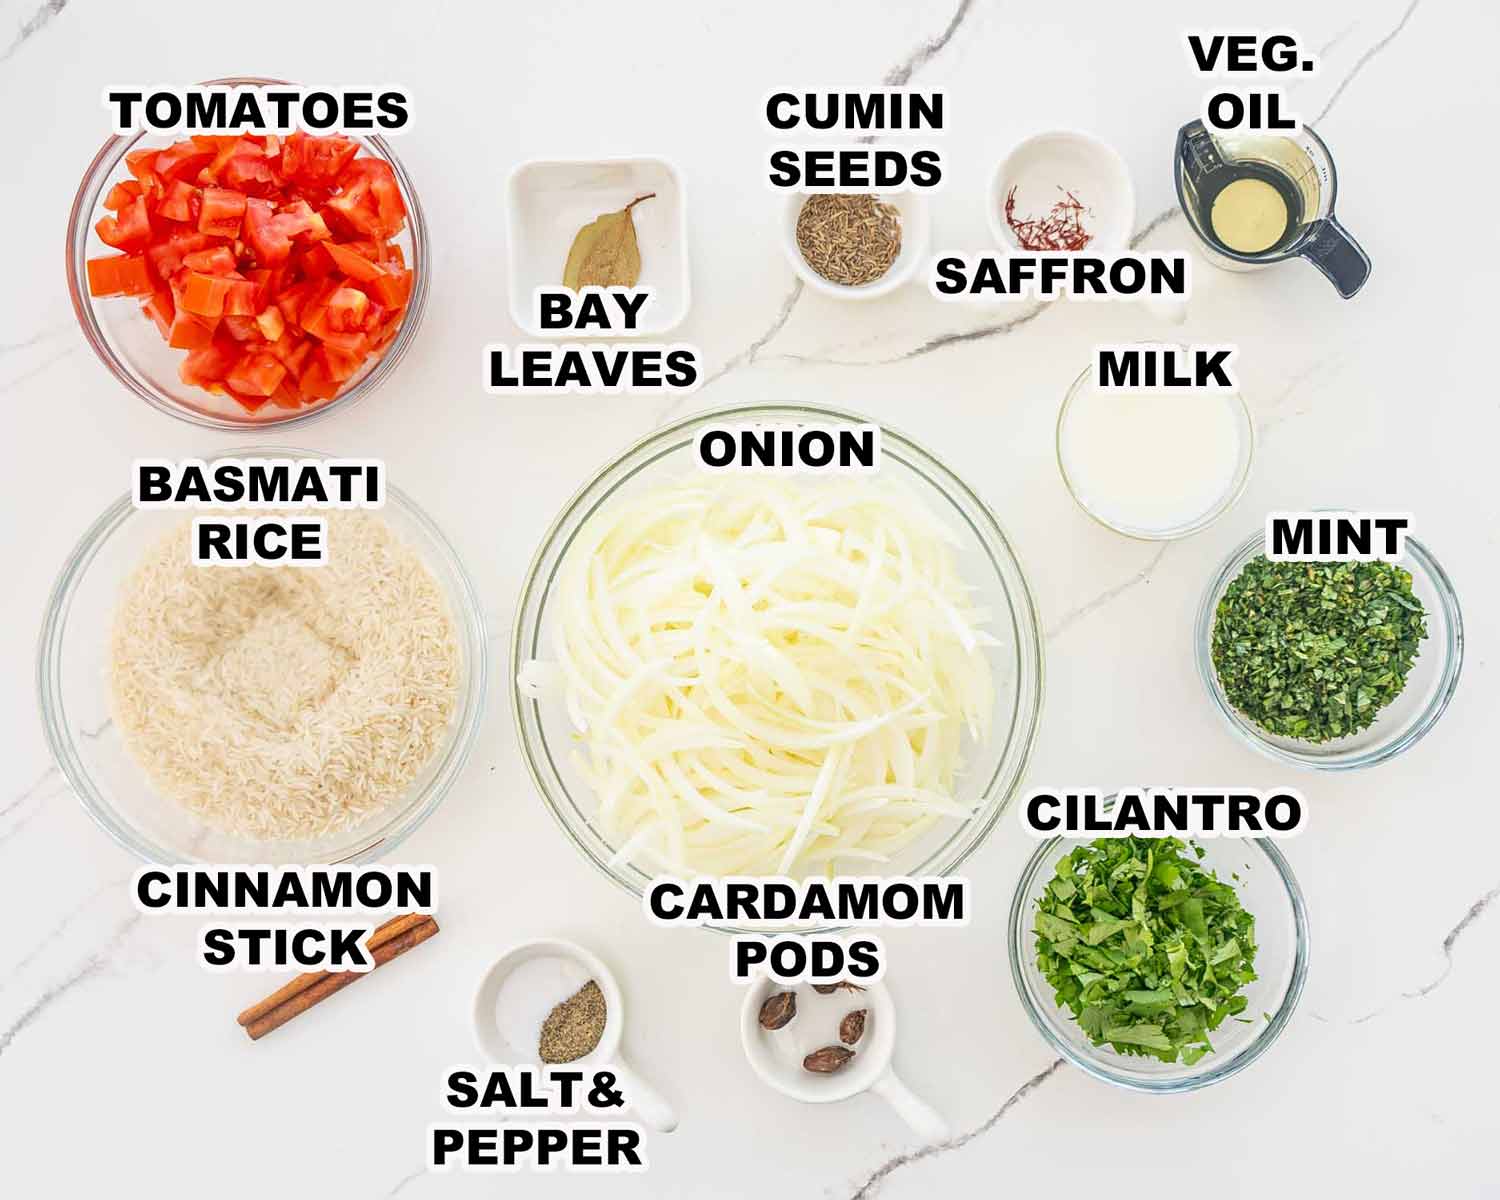 ingredients needed to make chicken biryani.